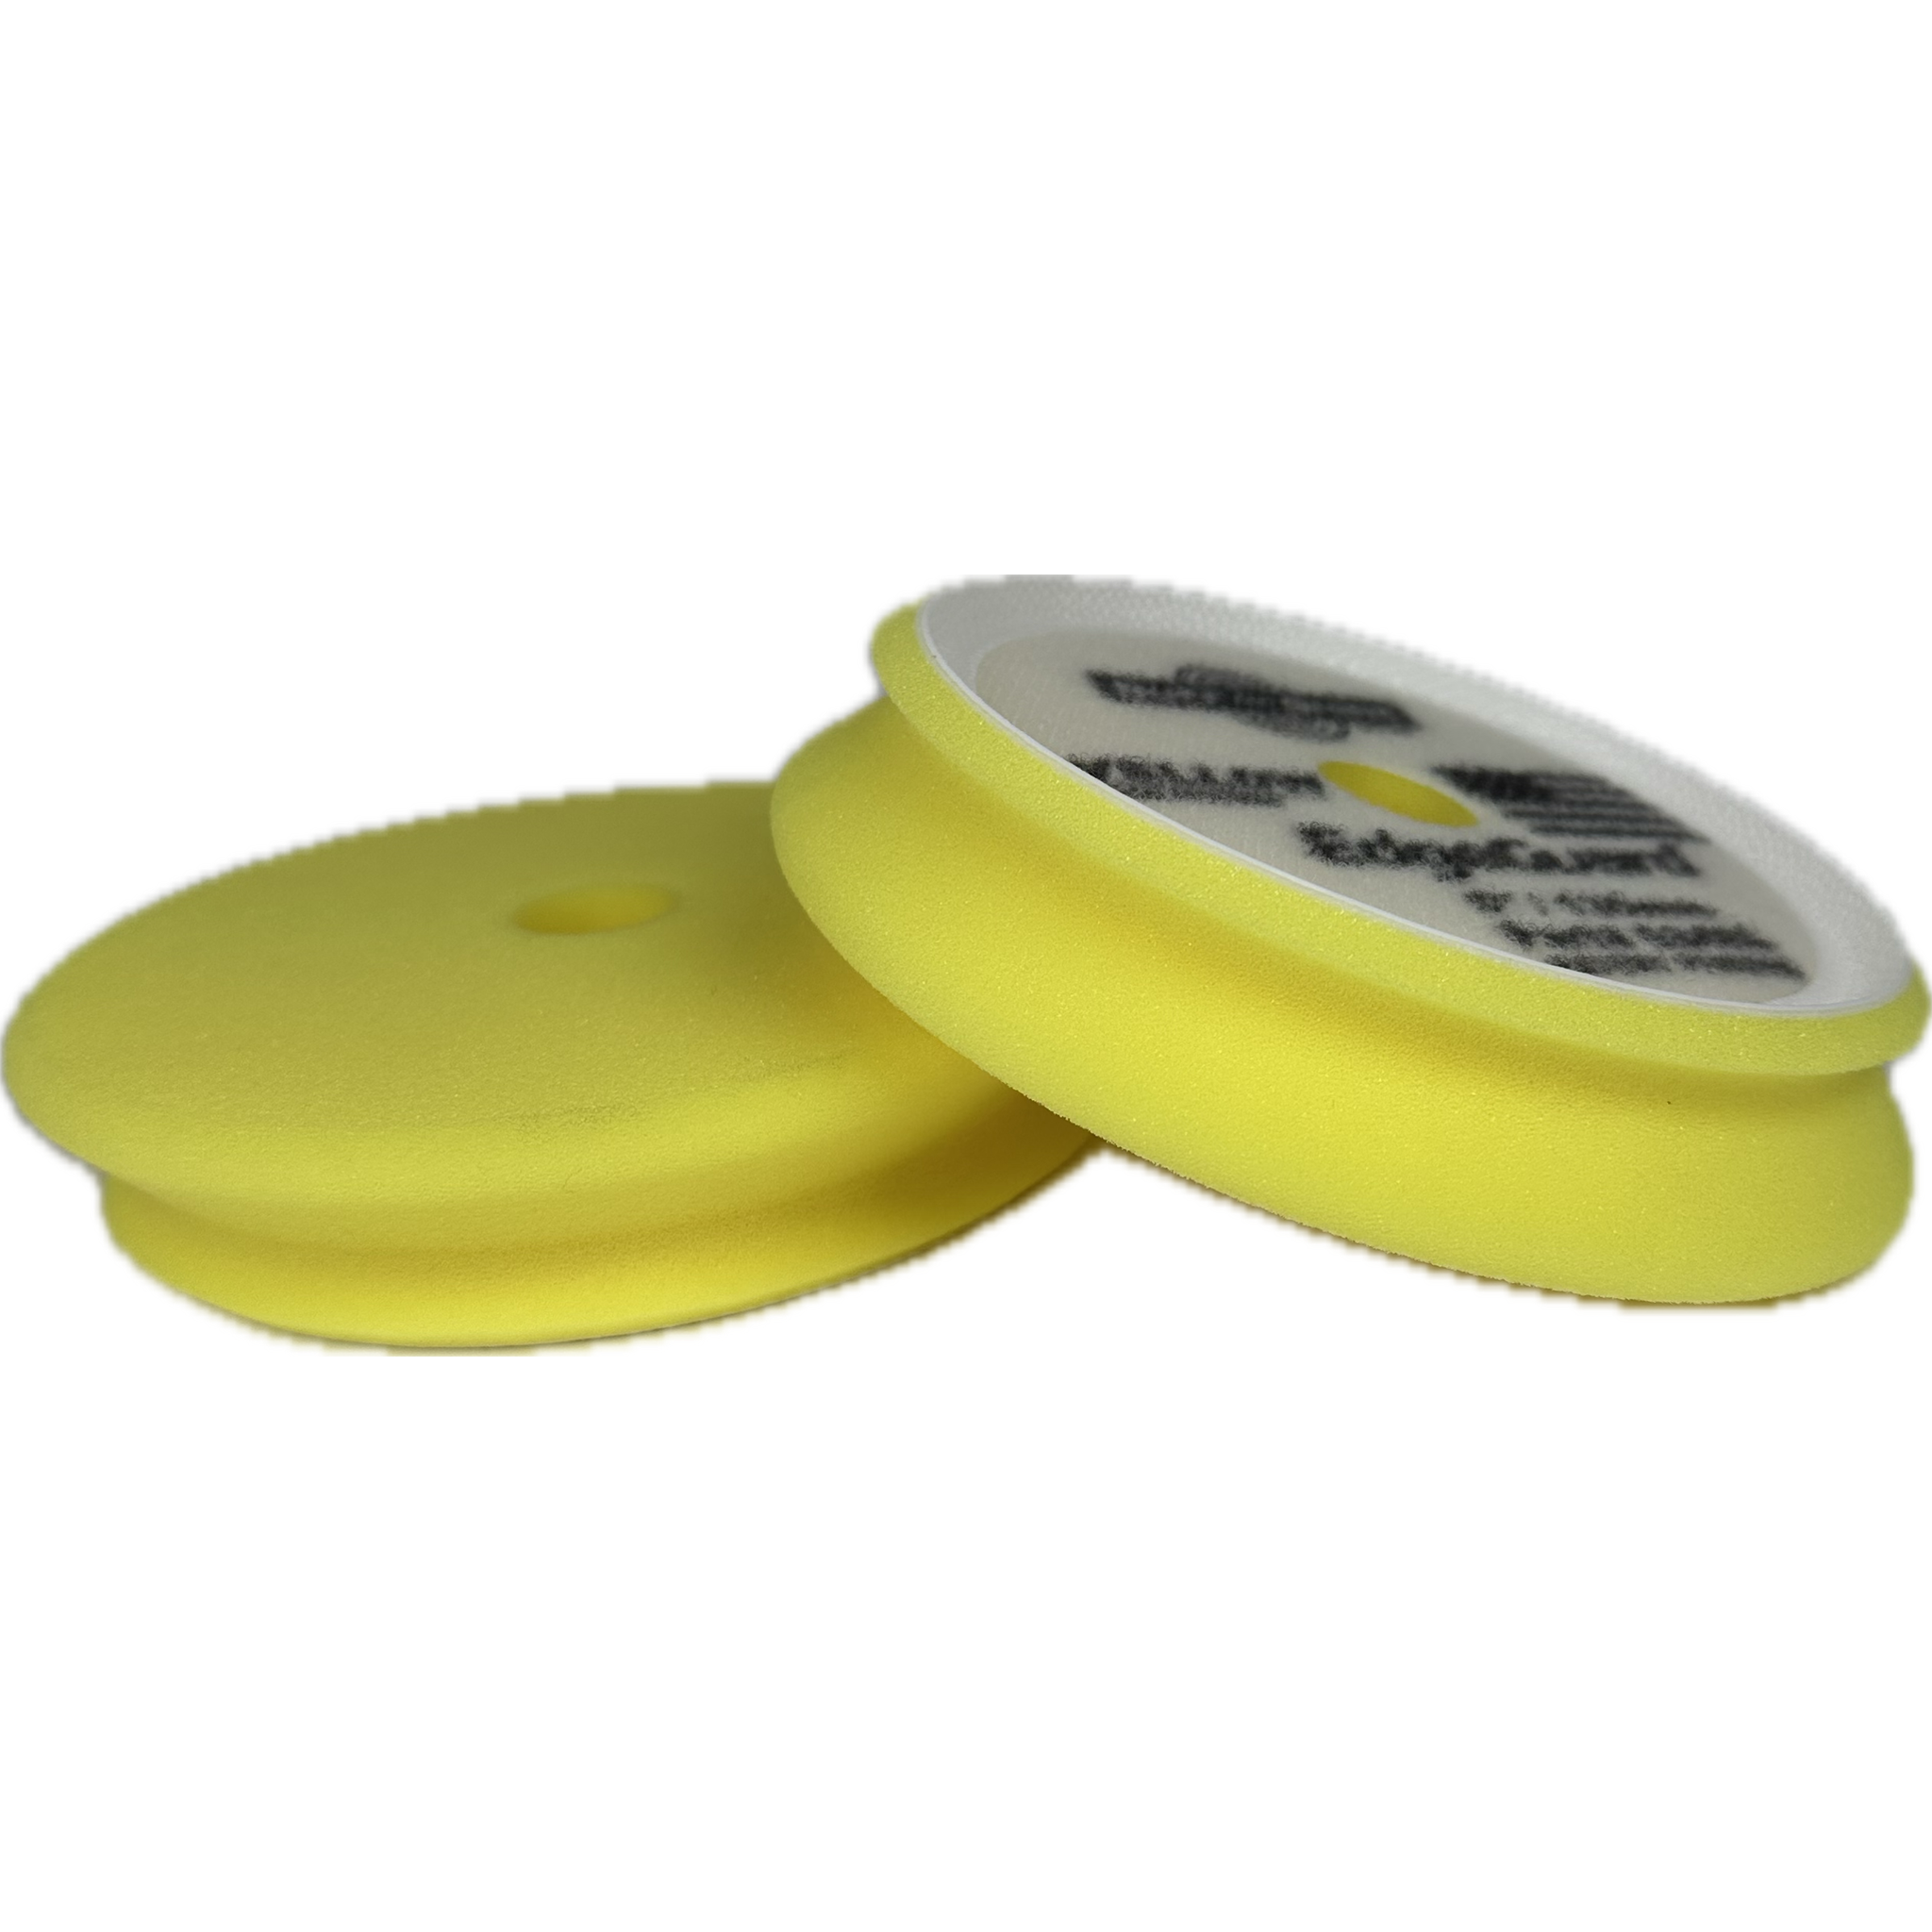 Edge Foam Pad, Yellow, Polishing, 5" / 130mm (2 pack)